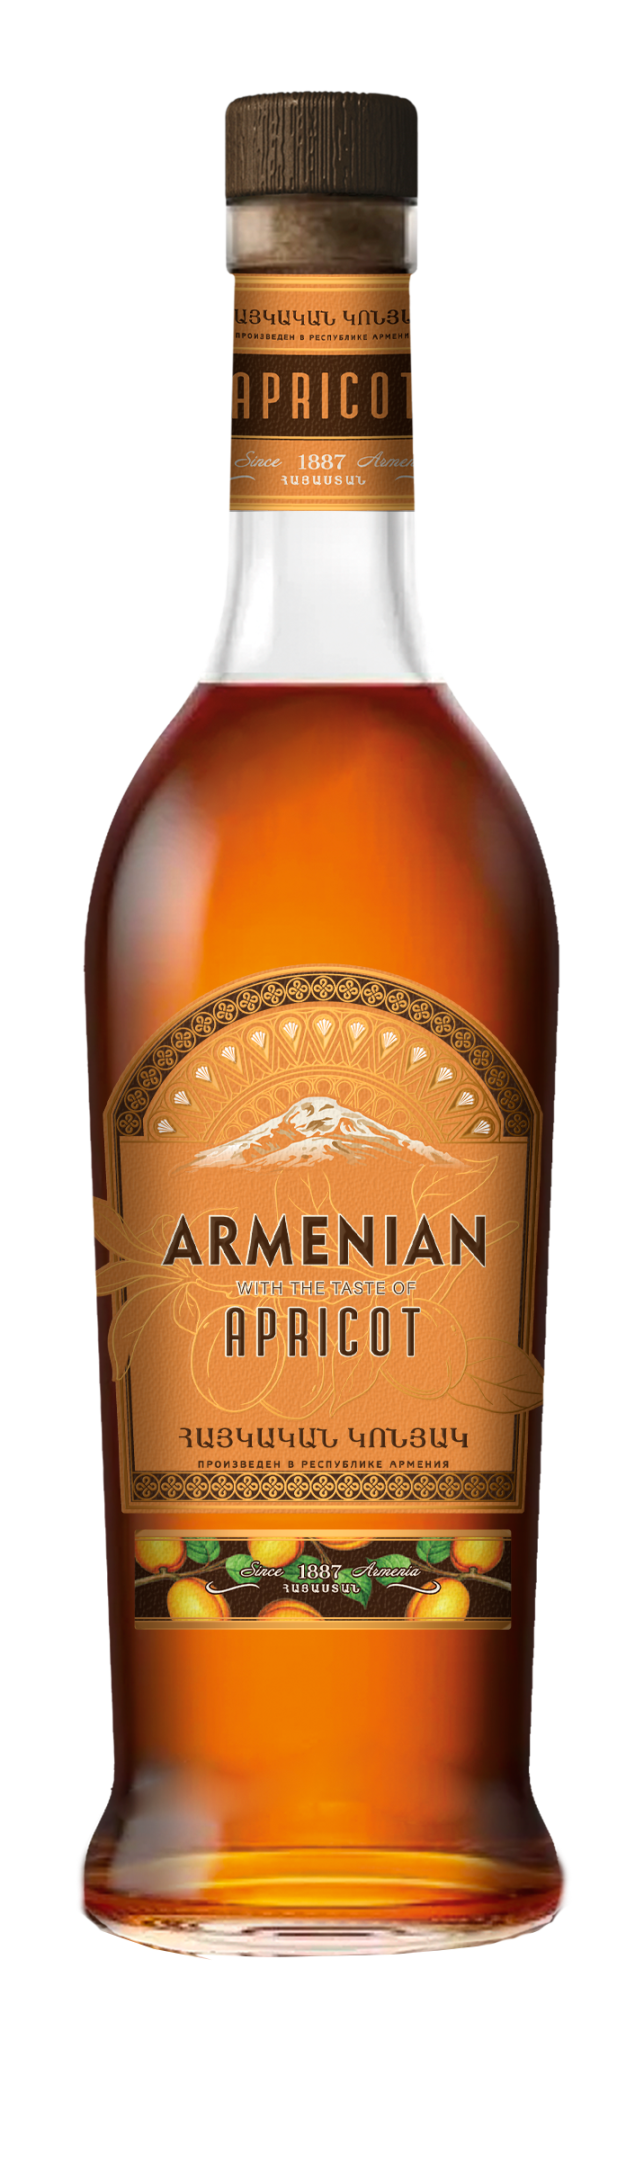 Бренди Абрикосовый Армянский Аркон нап.спирт.37,5% 0,5л (Армения)